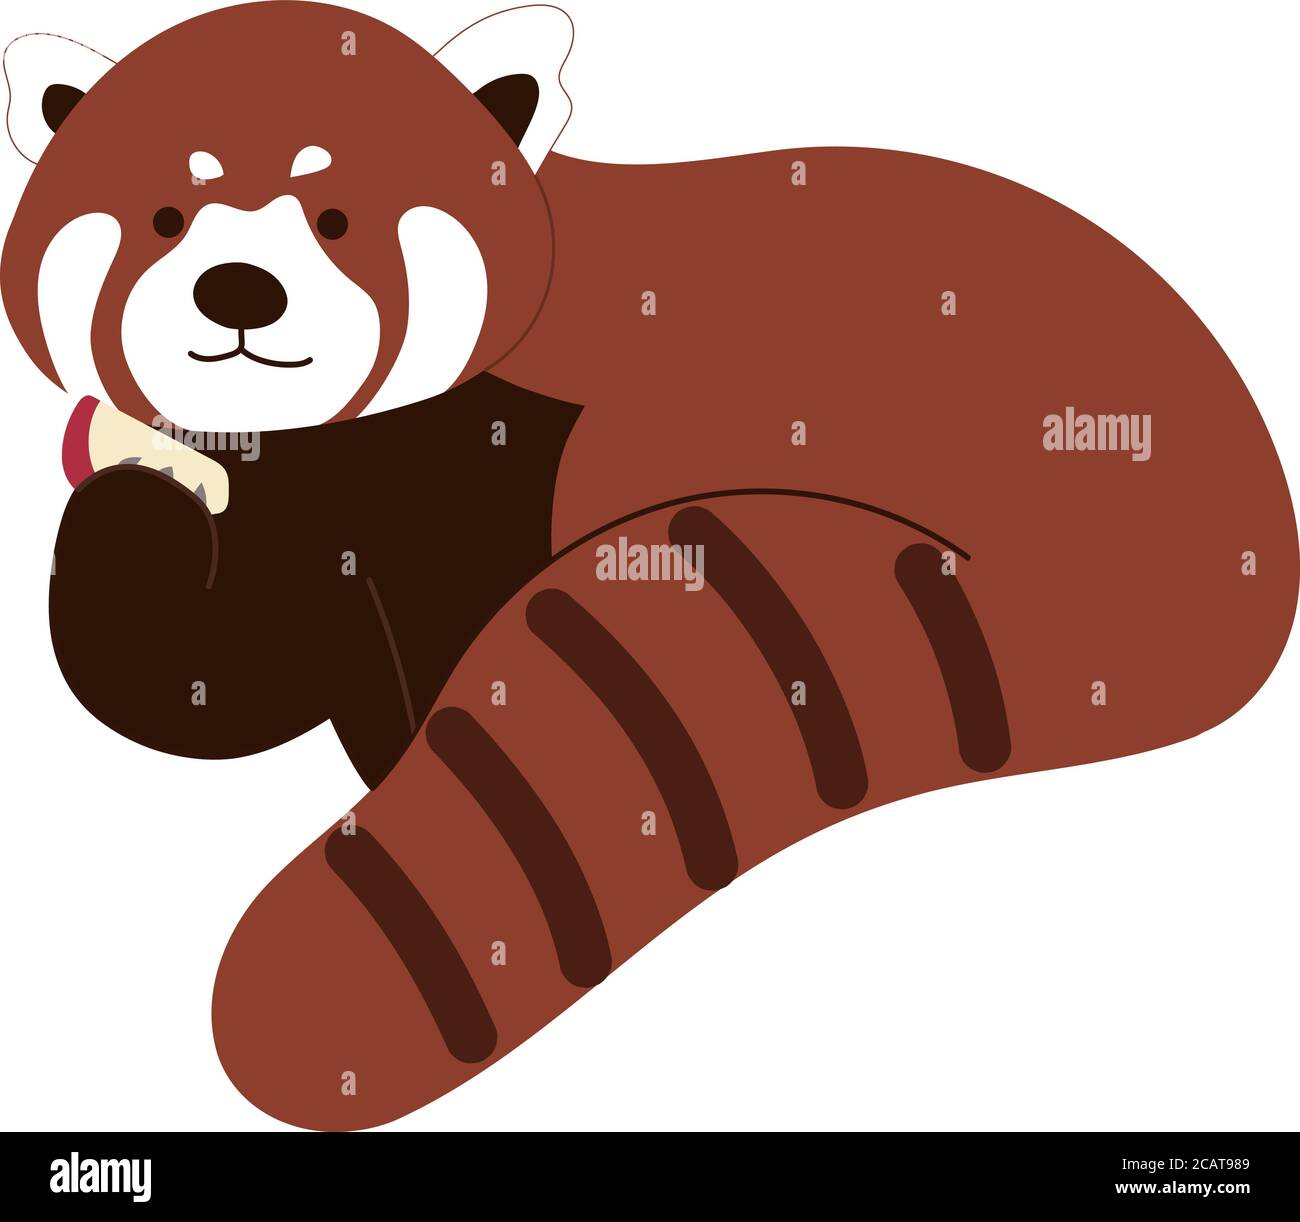 Cute cartoon Red Panda stock vector. Illustration of mammal - 230664380